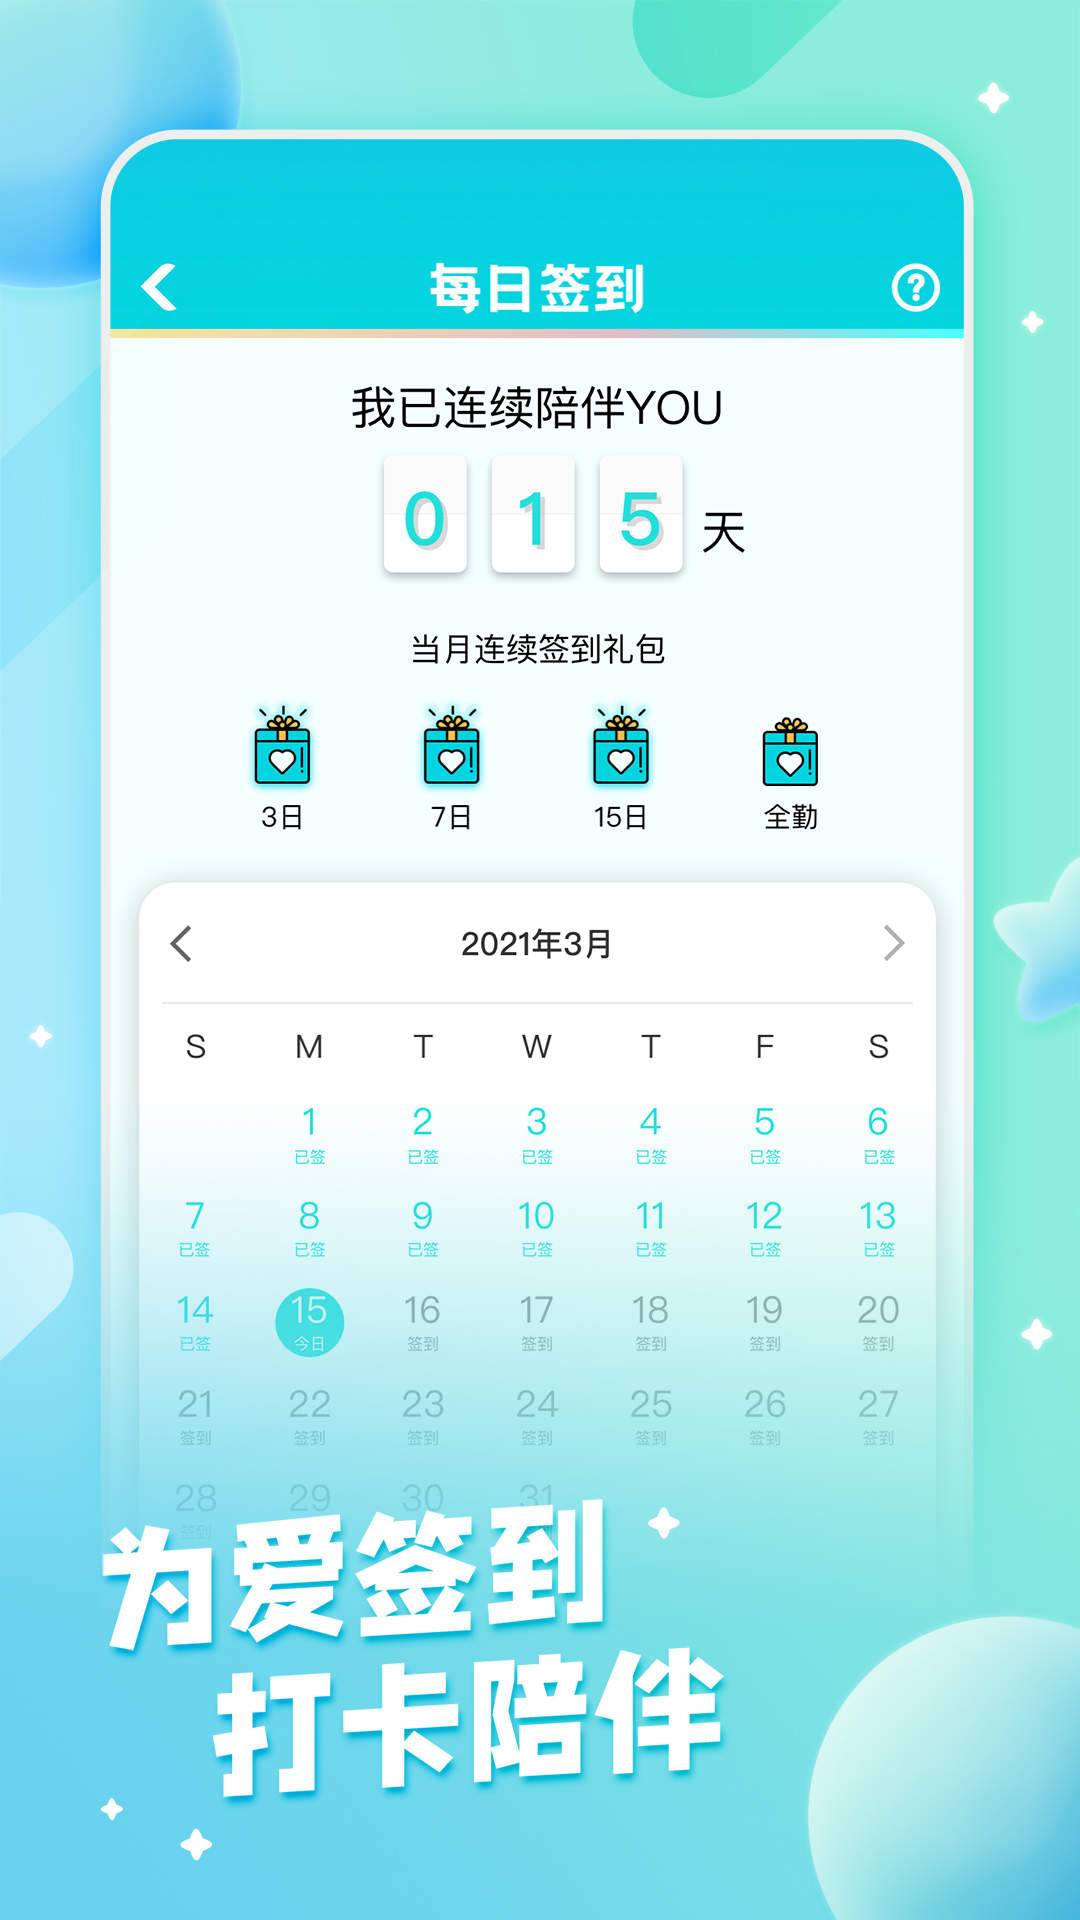 fanclub官方appv1.4.0